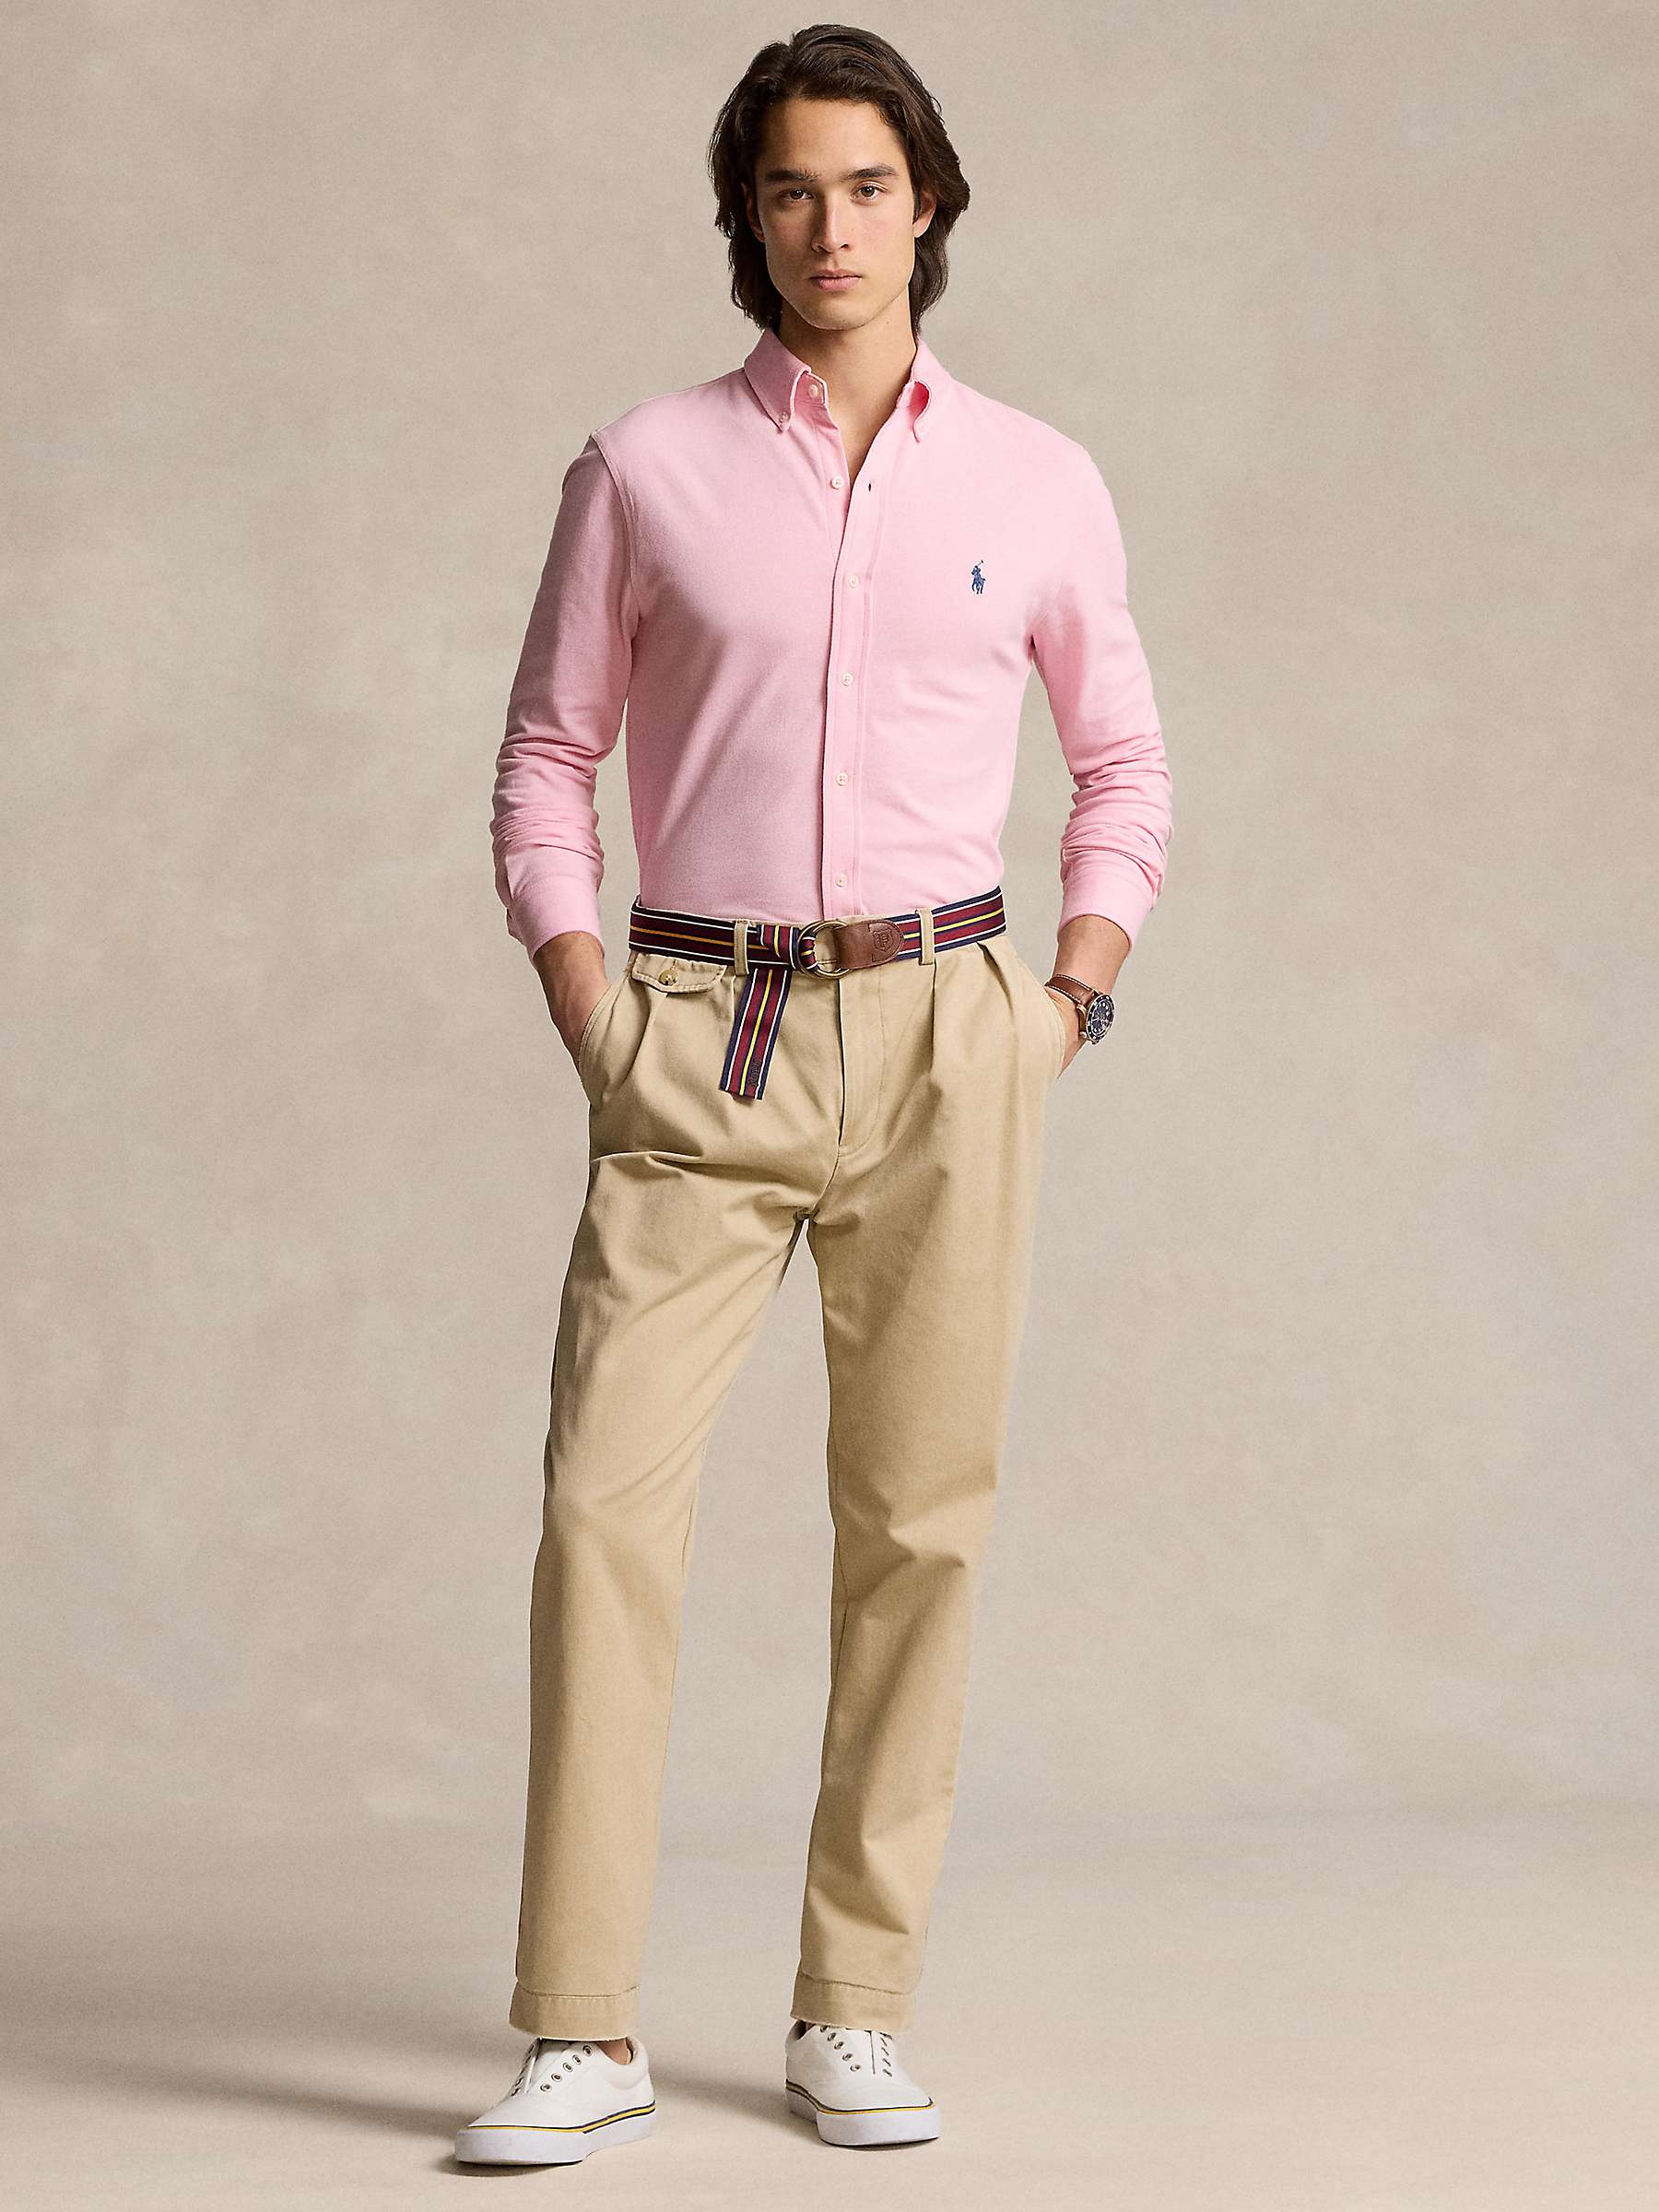 Buy Polo Ralph Lauren Mesh Long Sleeve Shirt Online at johnlewis.com